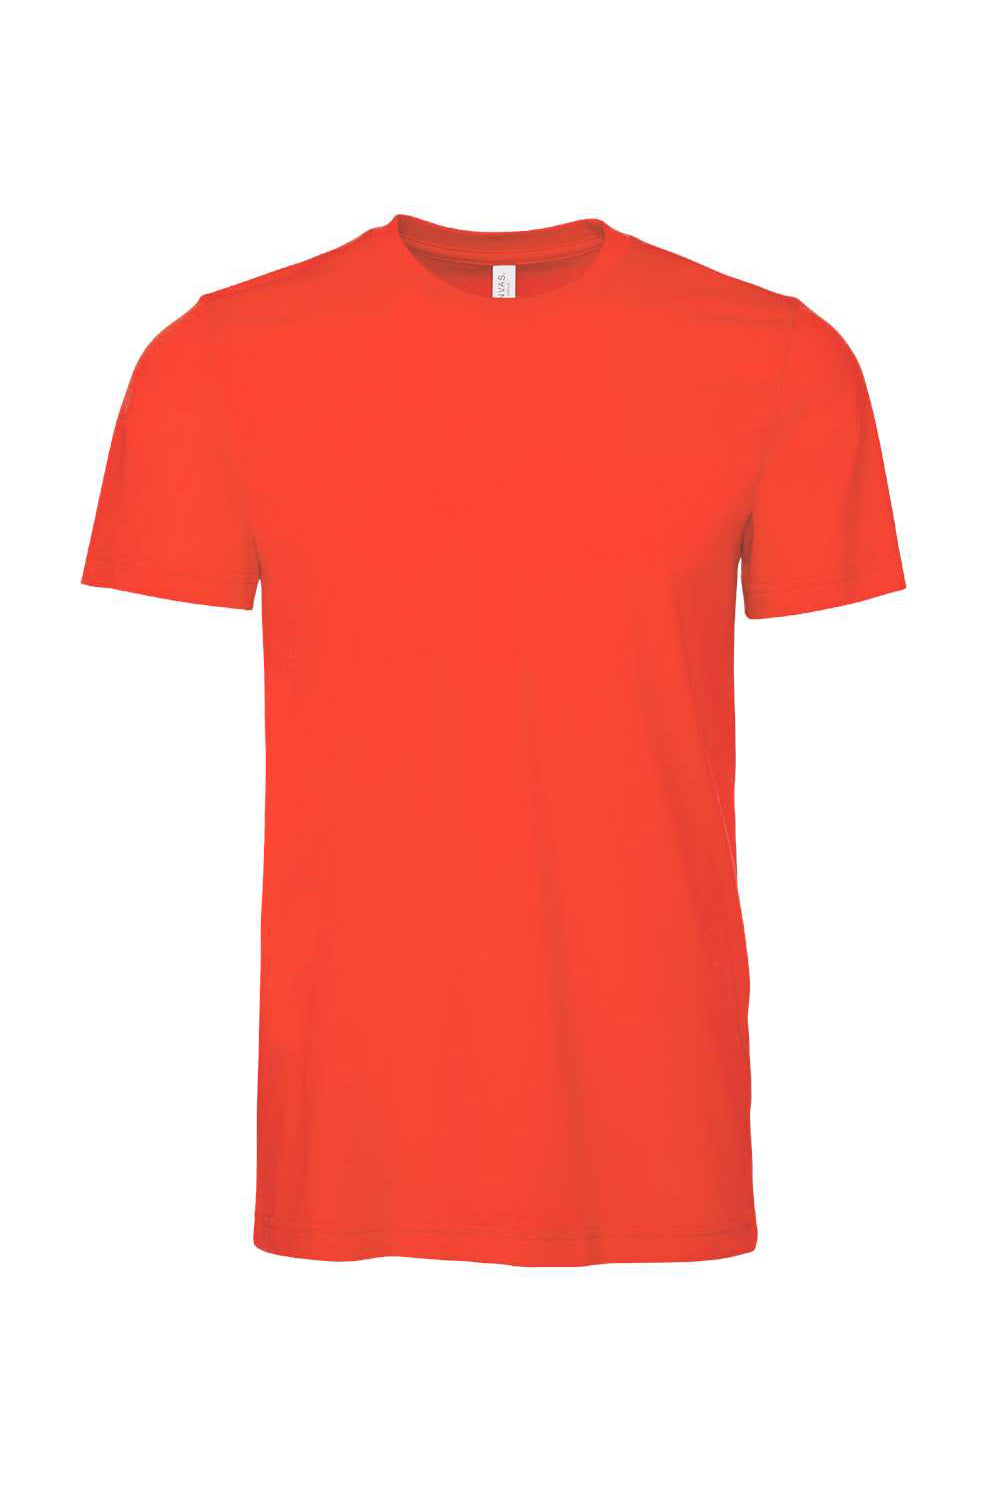 Bella + Canvas BC3001/3001C Mens Jersey Short Sleeve Crewneck T-Shirt Poppy Orange Flat Front